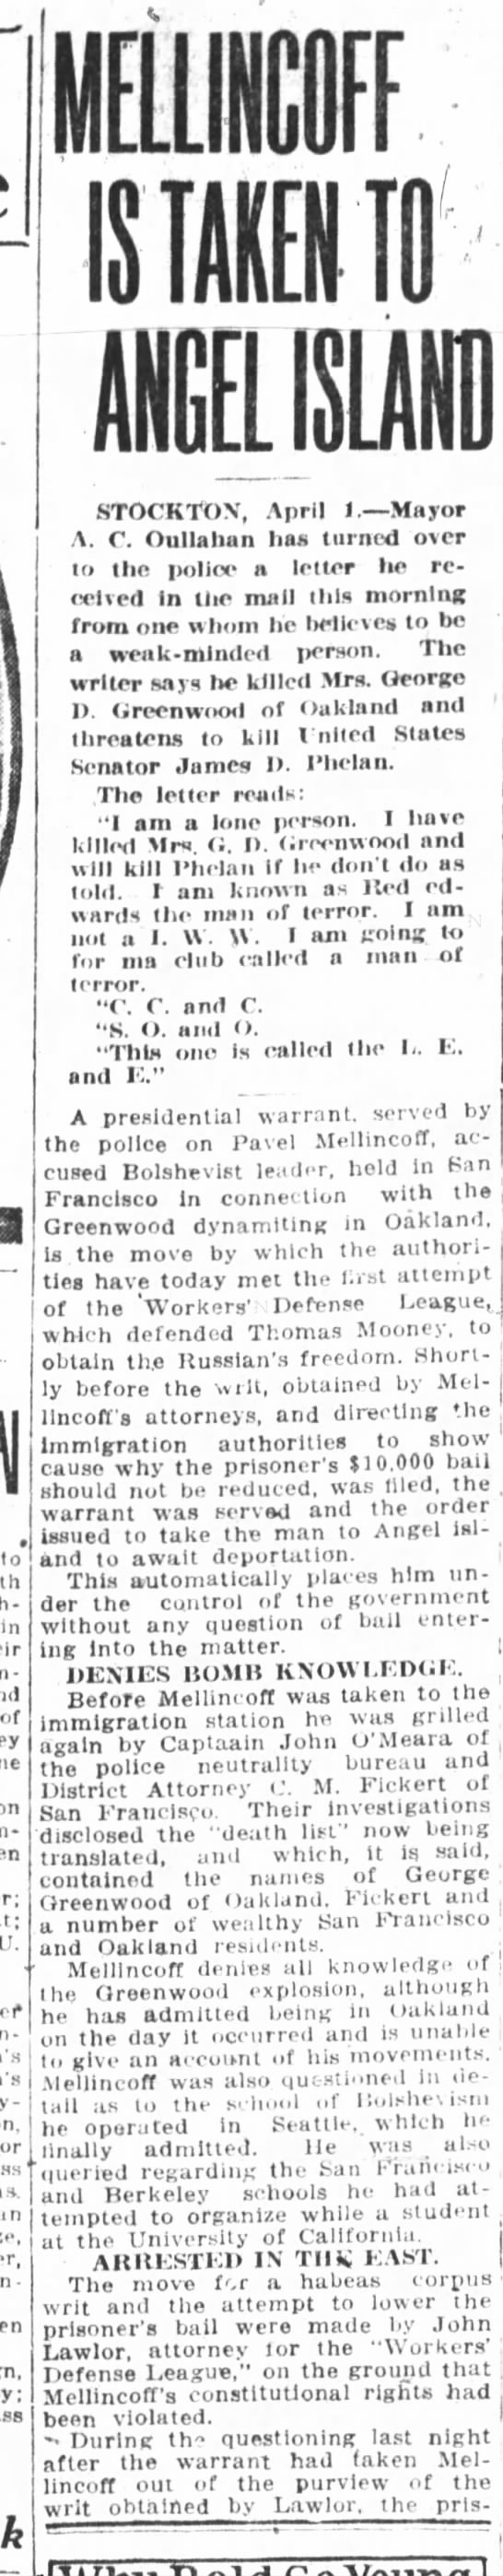 Mellincoff is Taken to Angel Island - Oakland Tribune April 01, 1919 - 